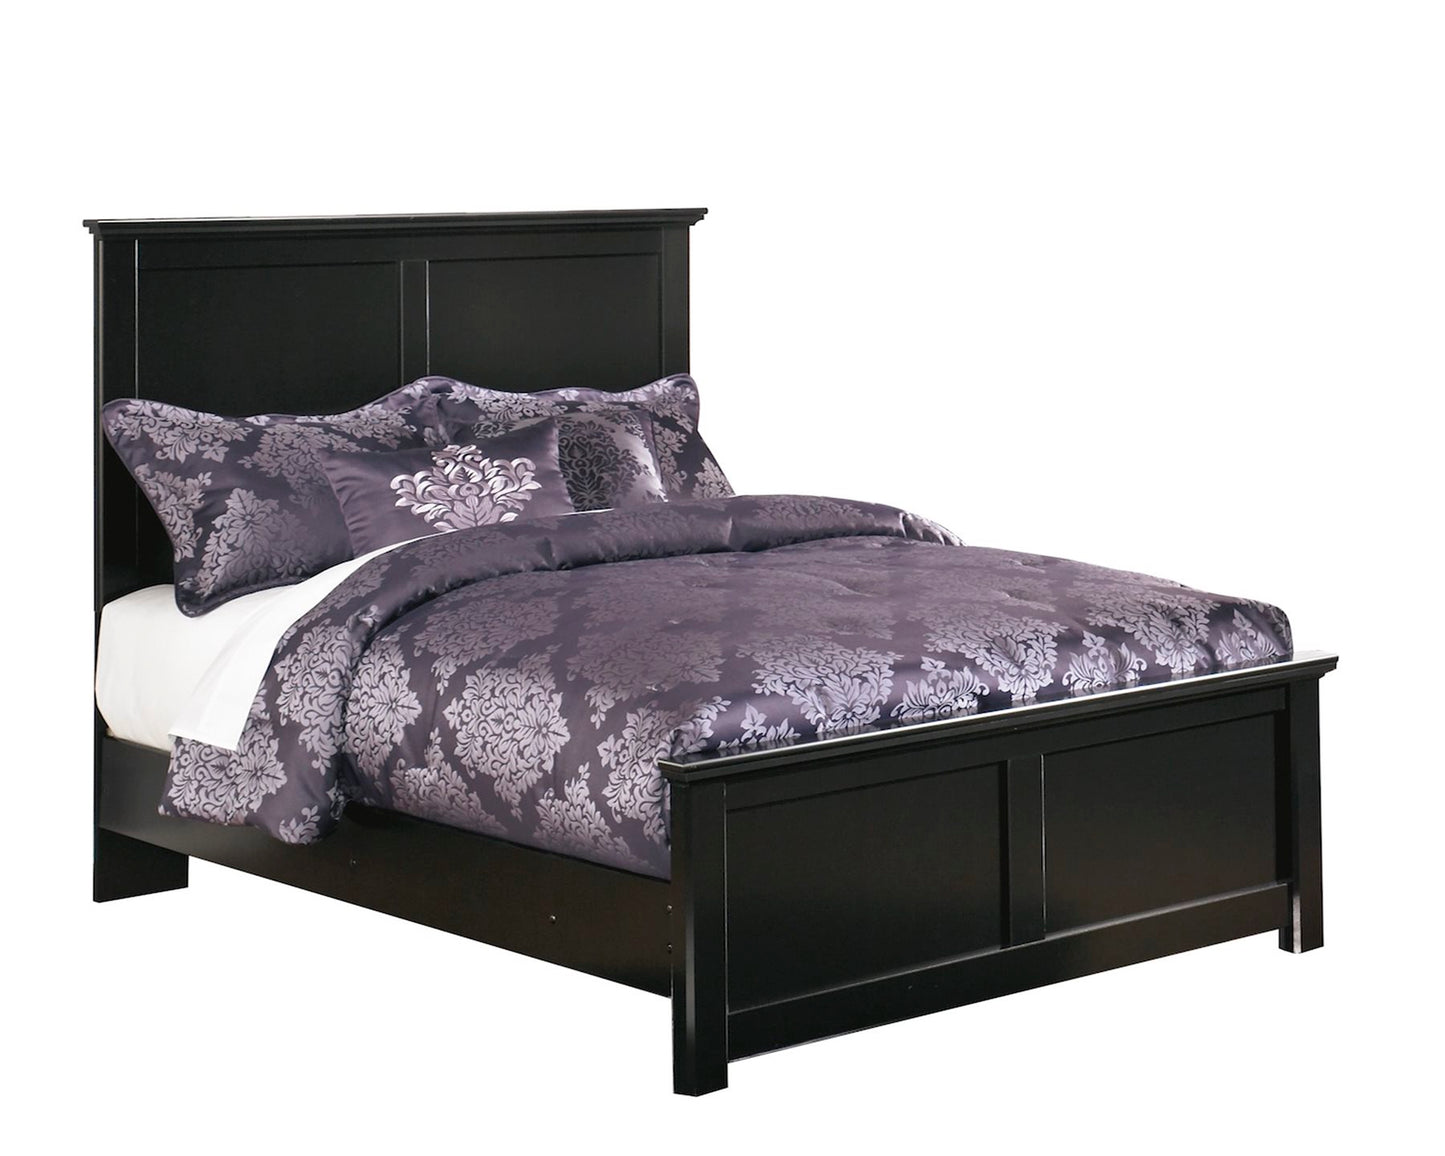 Ashley Maribel 5 PC Queen Panel Bedroom Set with two Nightstands in Black - The Furniture Space.